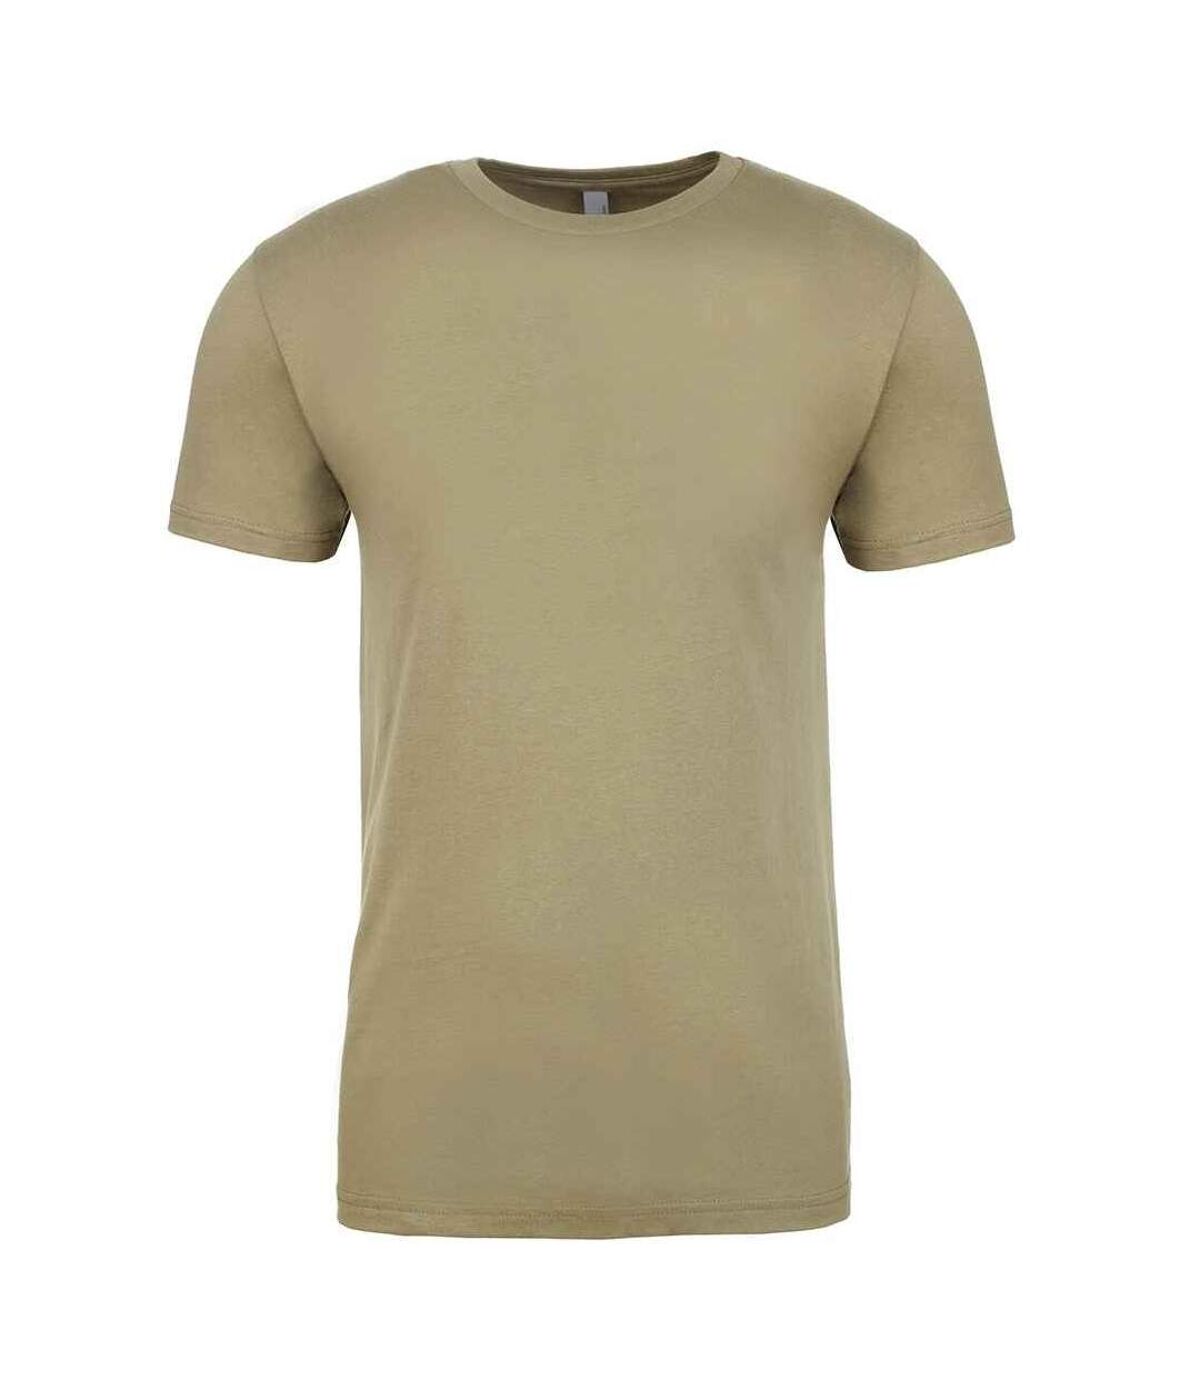 Next Level - T-shirt manches courtes - Unisexe (Olive clair) - UTPC3469